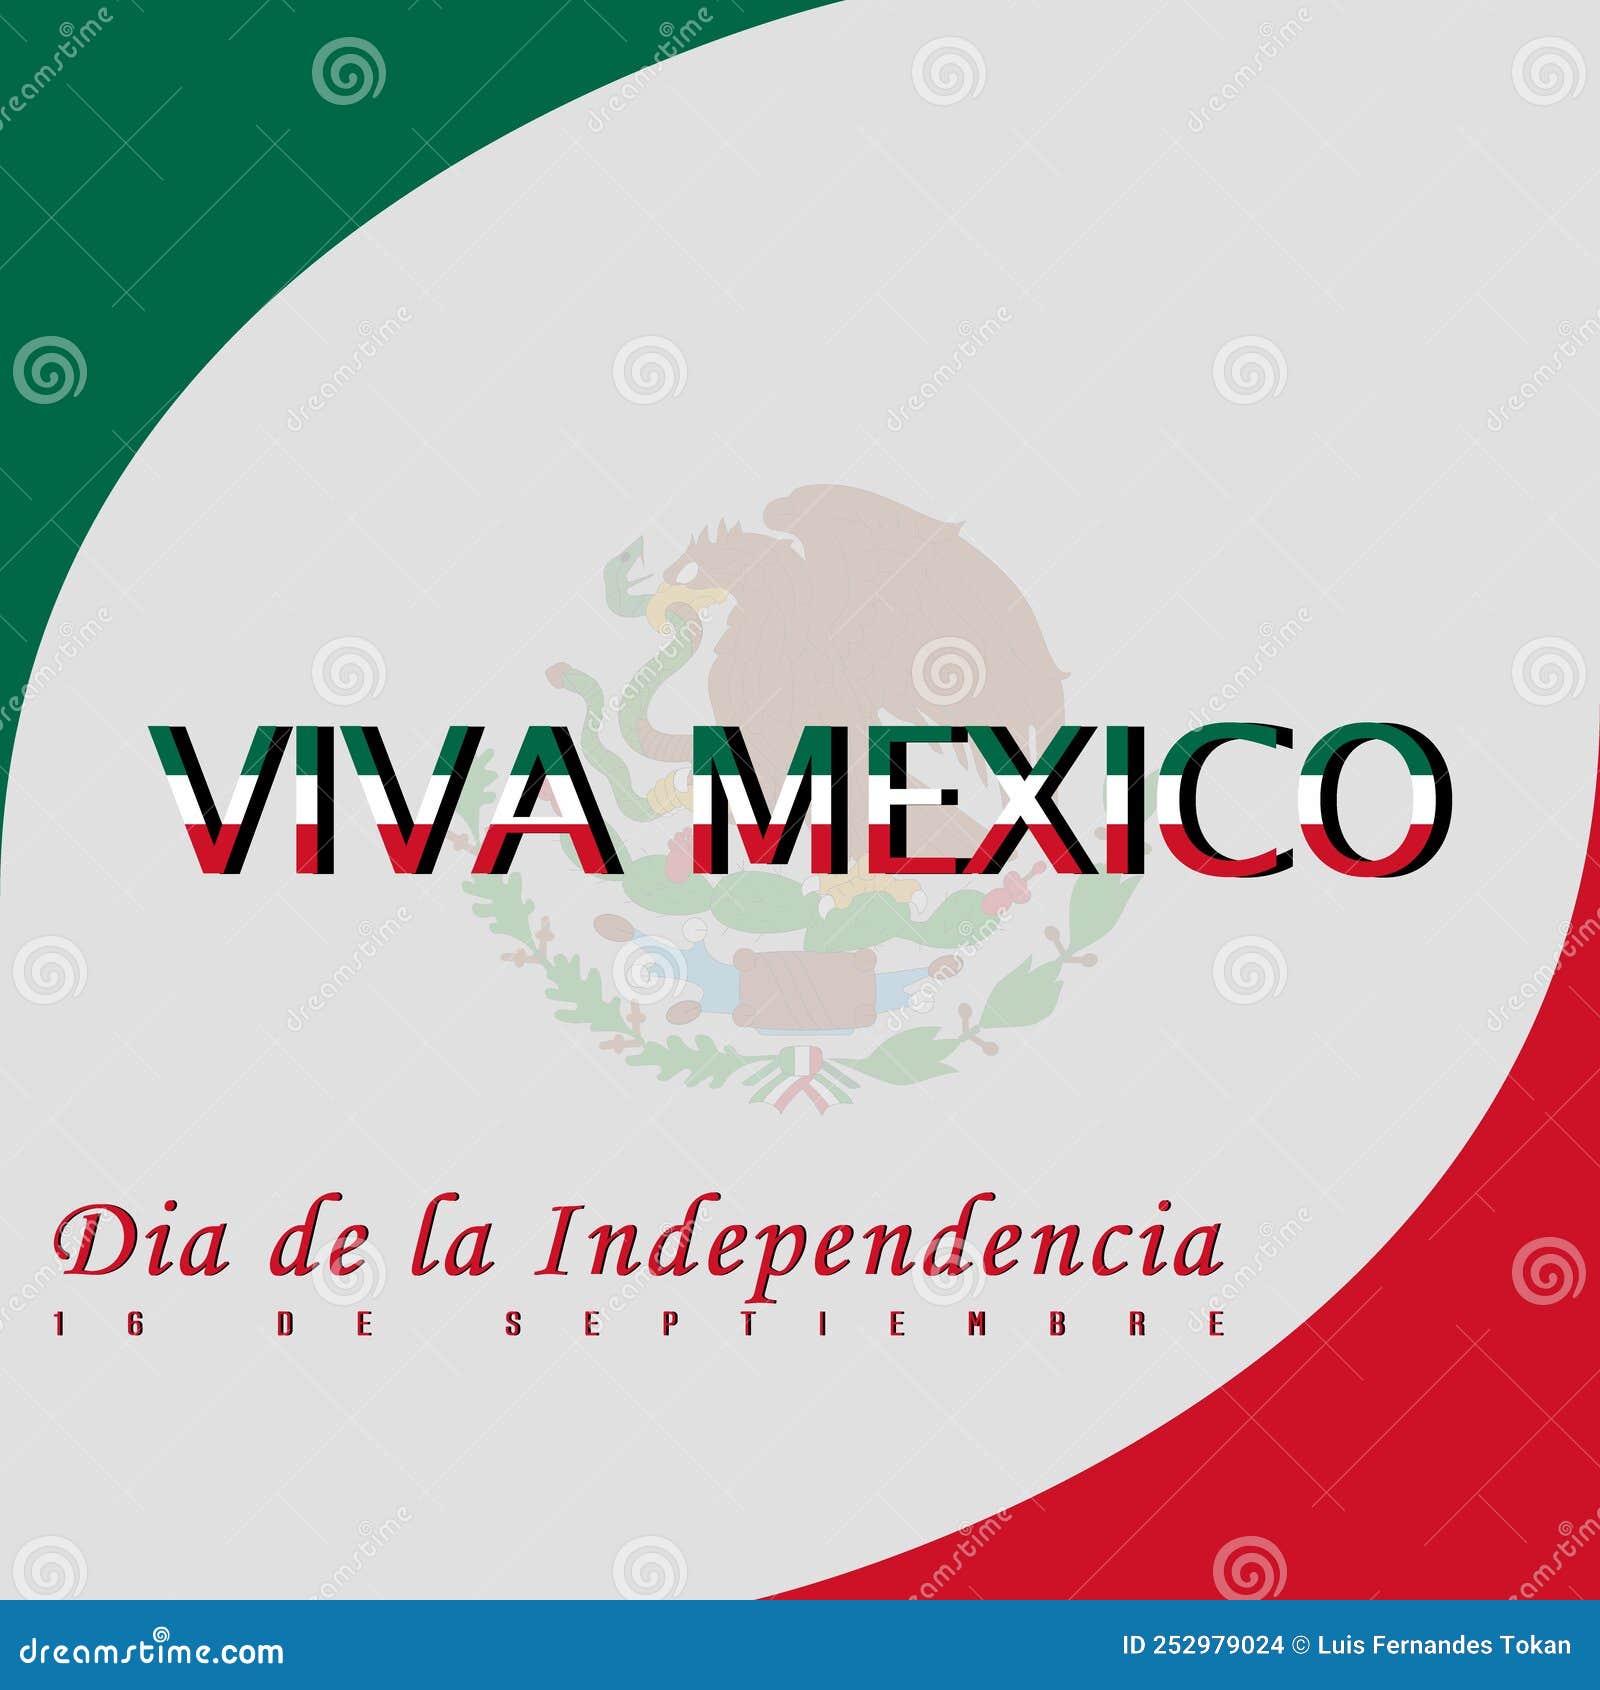 dia de la independencia de mexico, viva mexico, mexico's independence day.